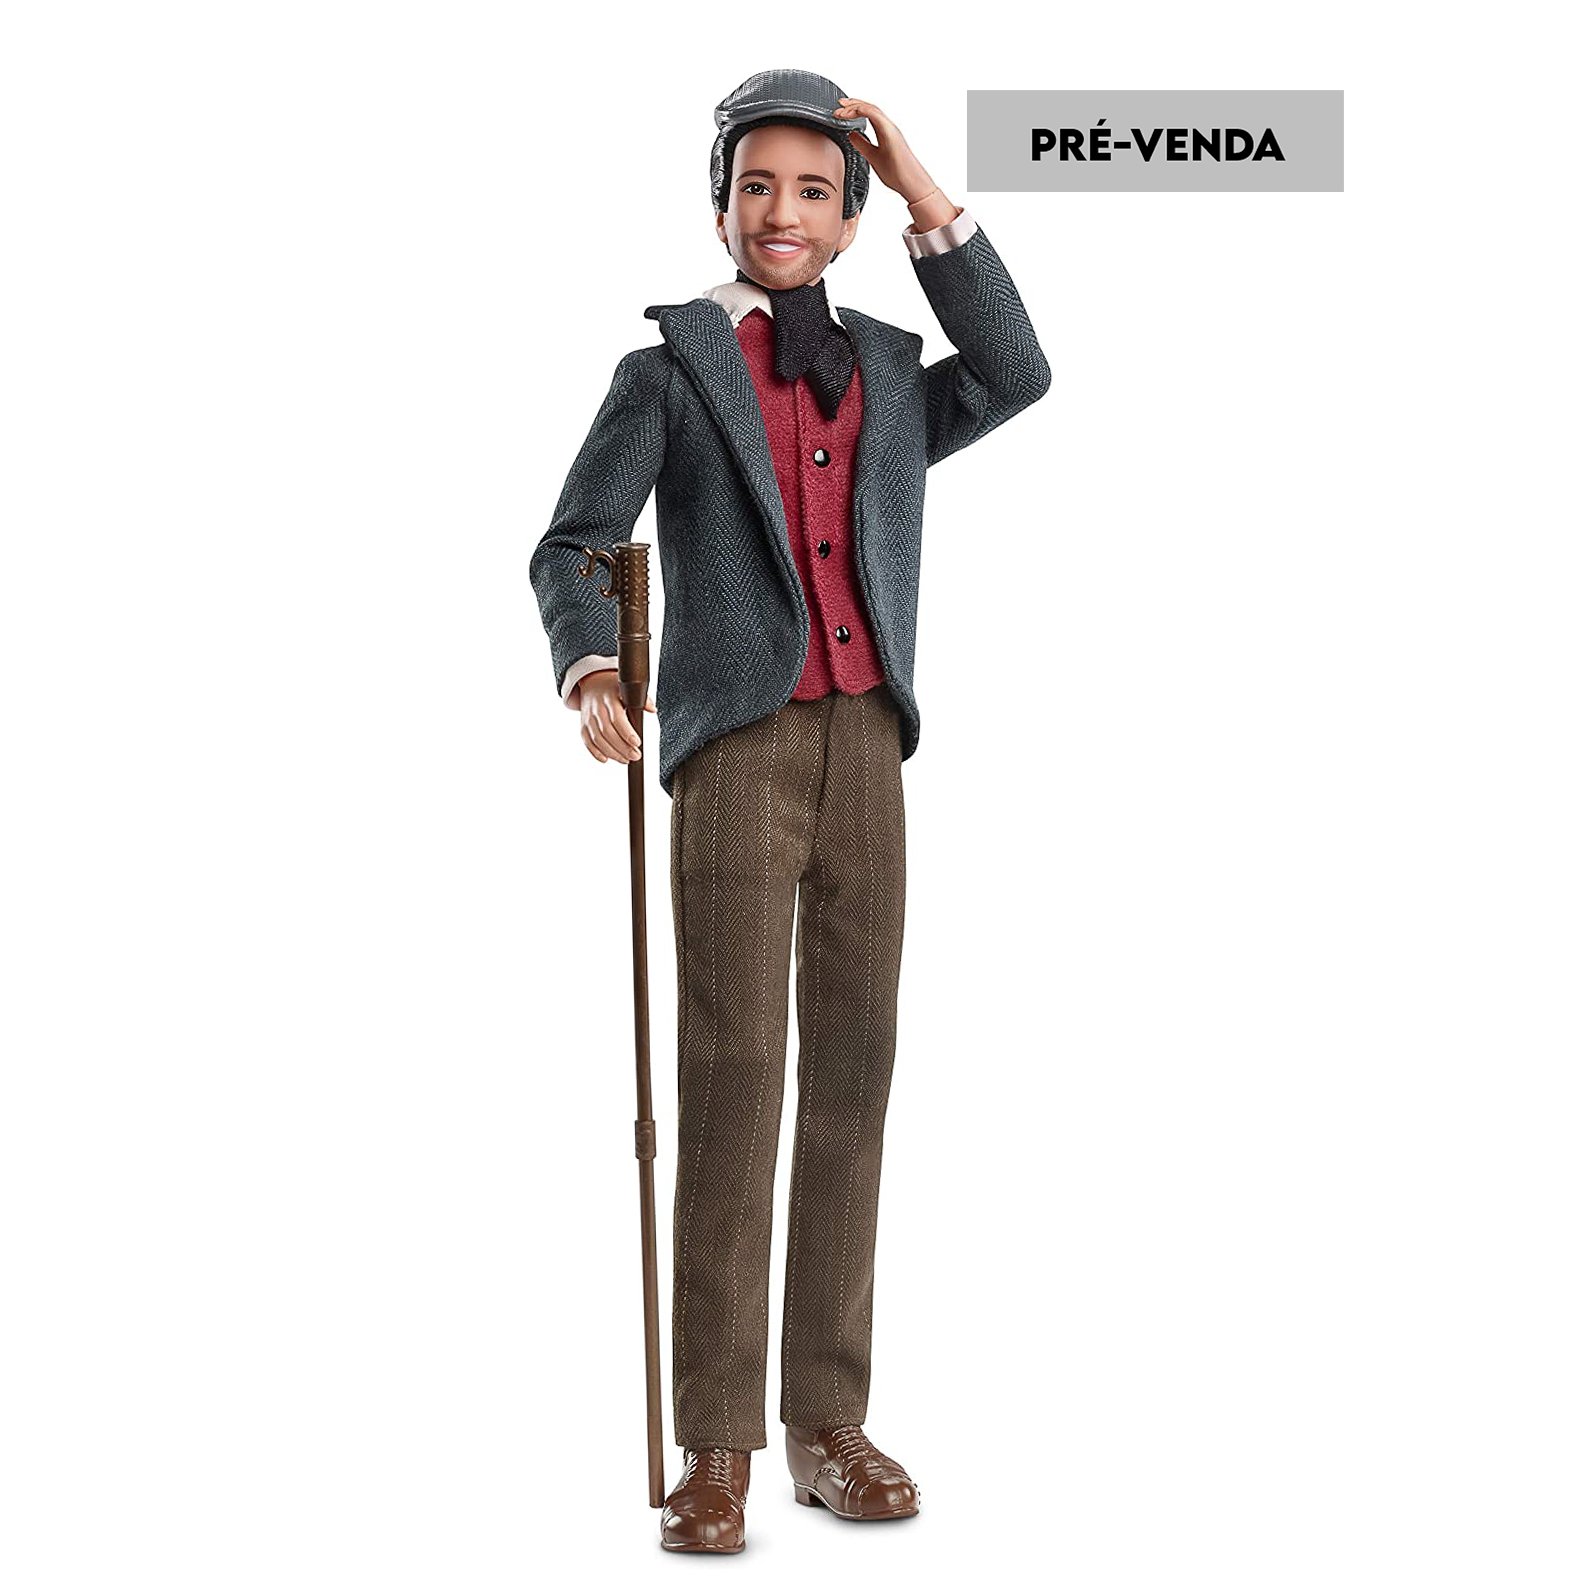  PRÉ-VENDA Boneco Barbie Collector Jack Mary Poppins Returns - Mattel